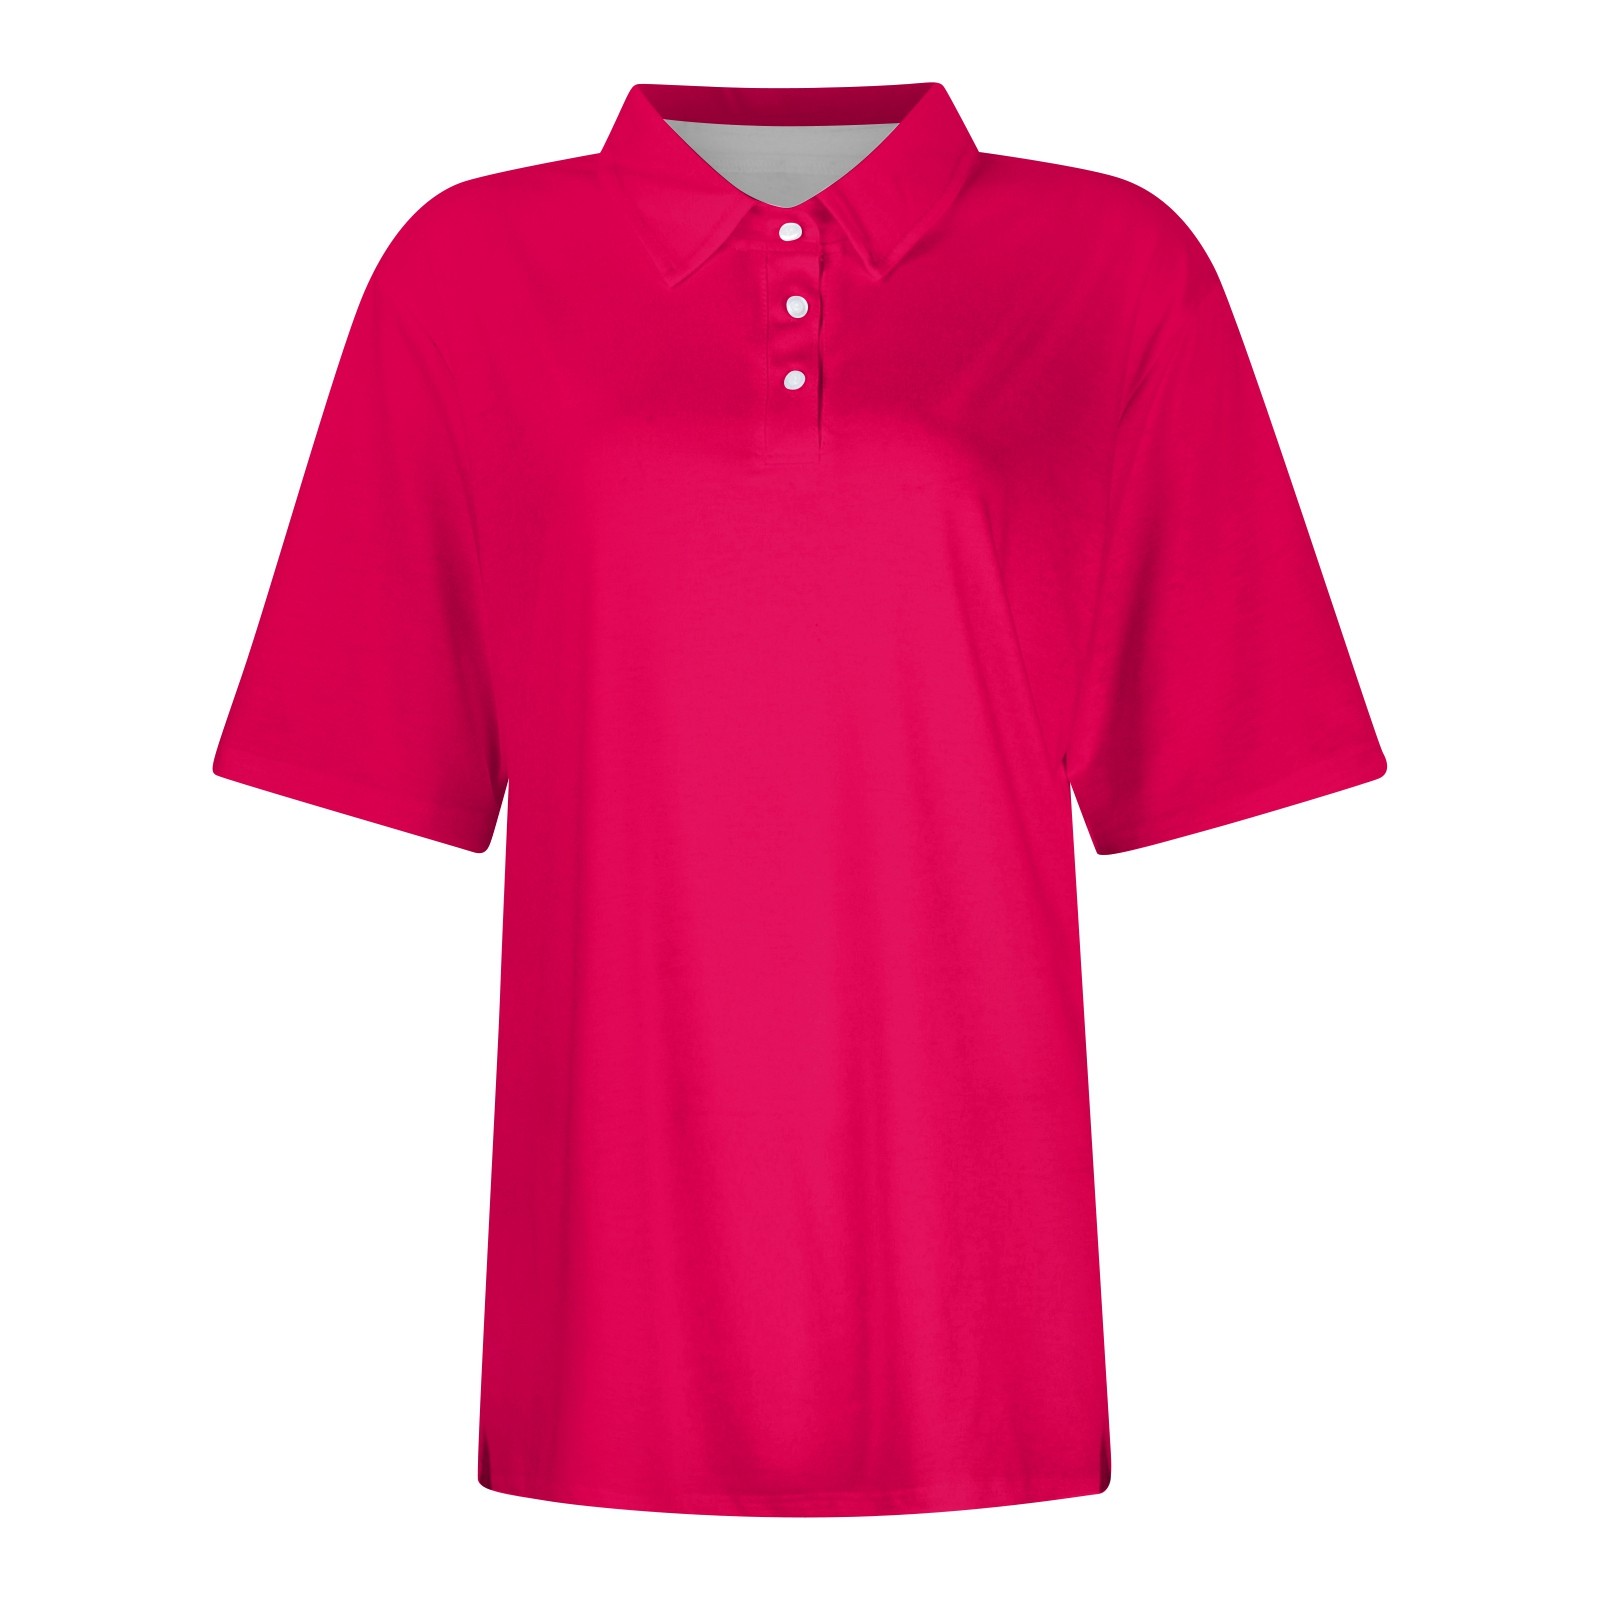 Mohiass Golf Polo Shirts for Women Summer Quick Dry Short Sleeve Button ...